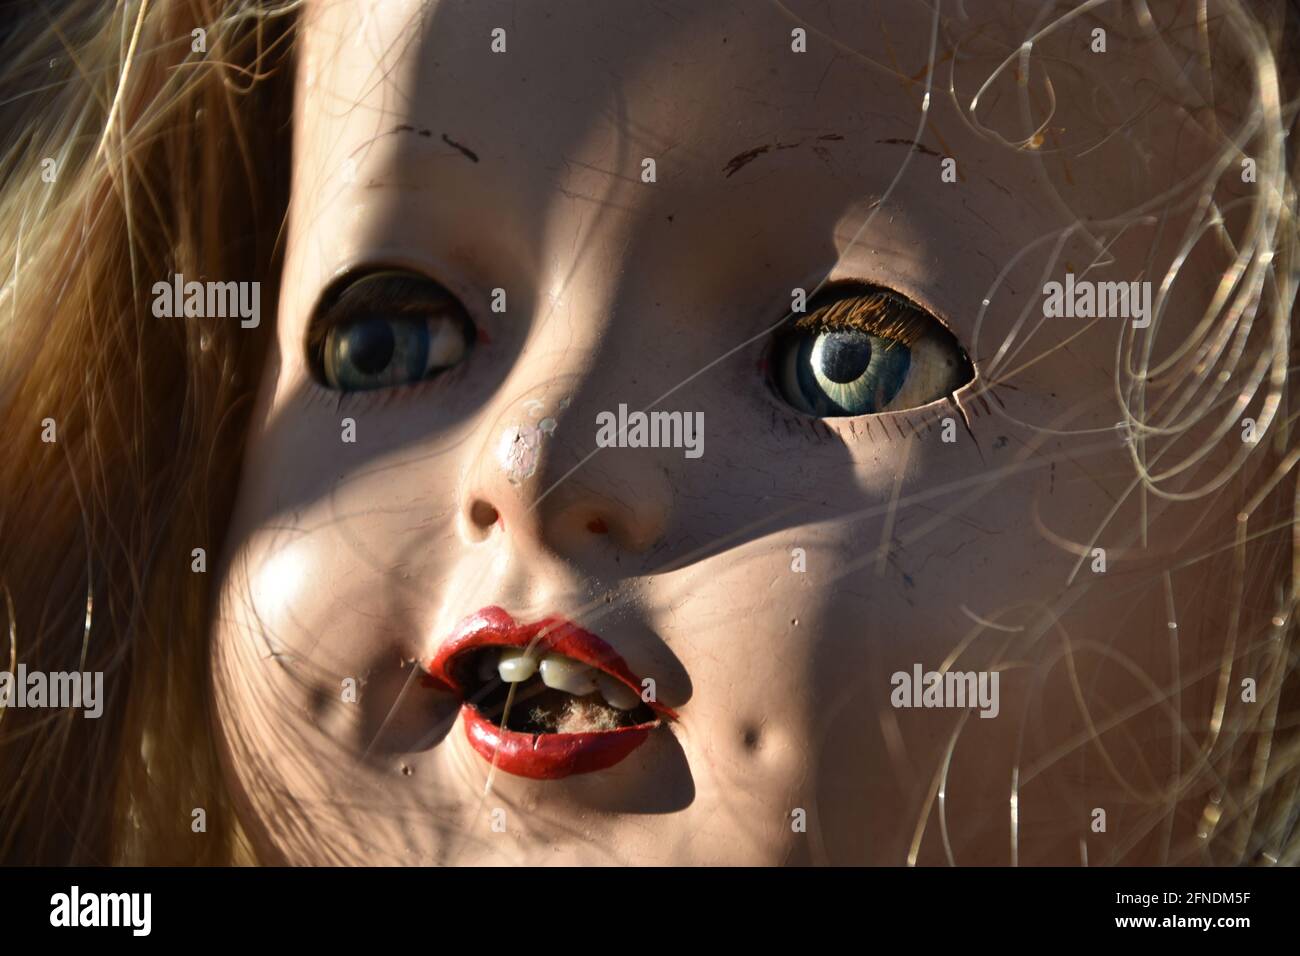 A closeup of a creepy old doll face Stock Photo